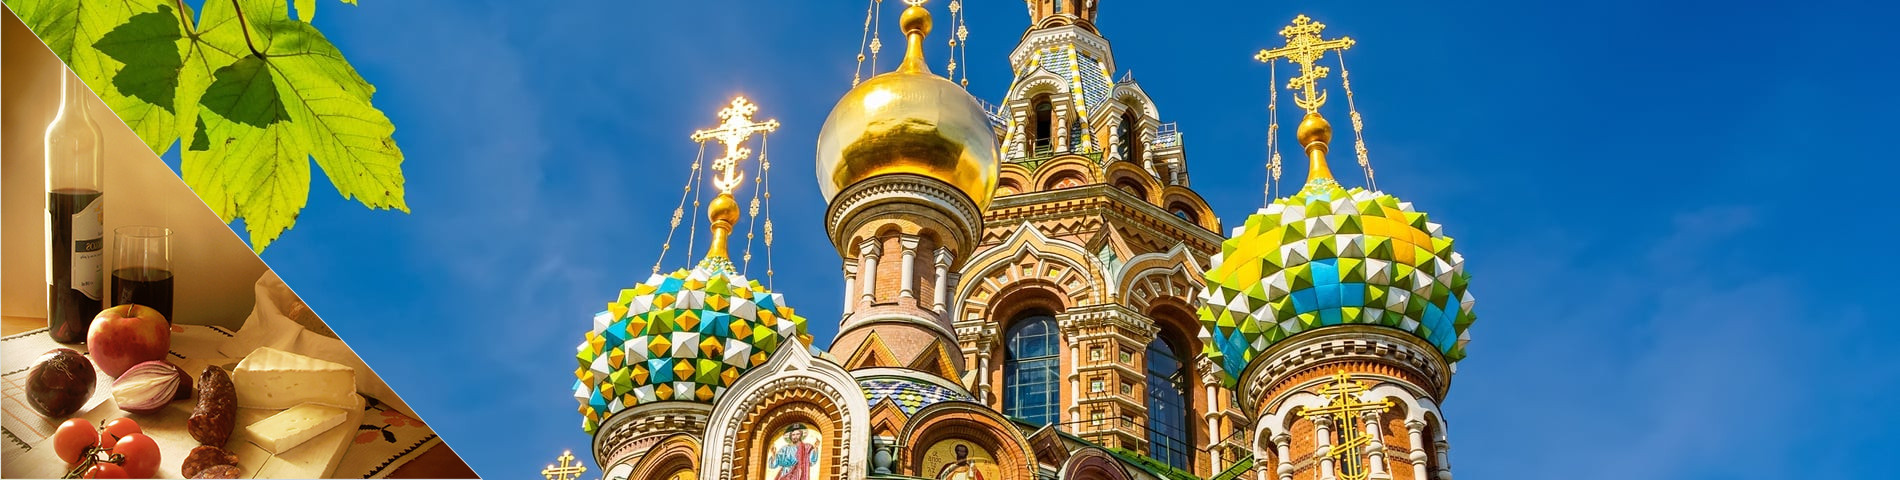 St. Petersburg - Russisch & Kultur